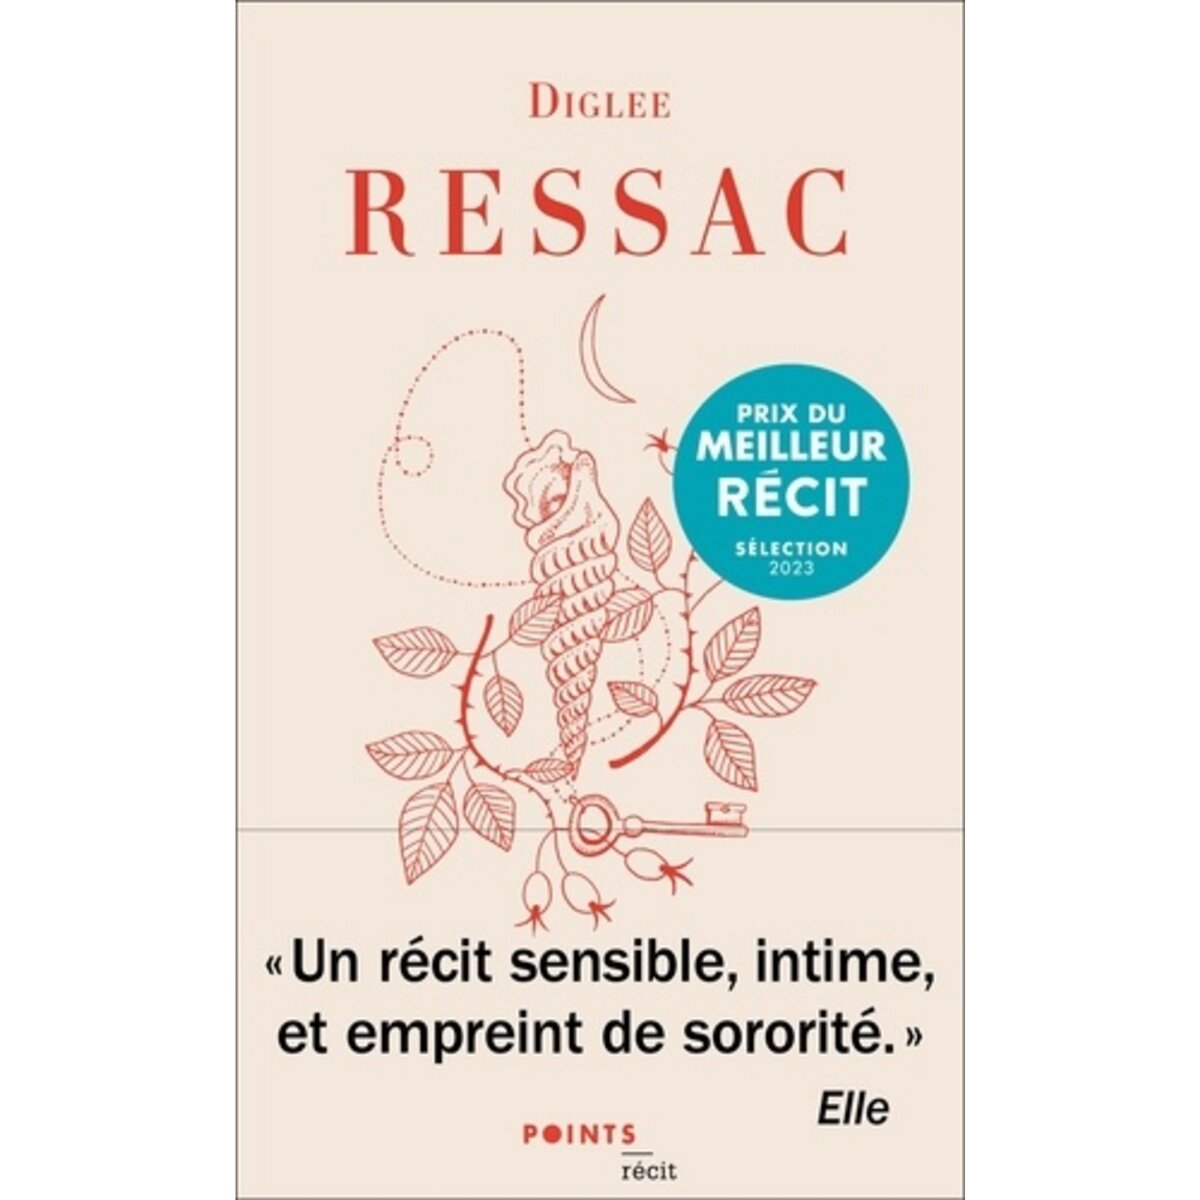  RESSAC, Diglee